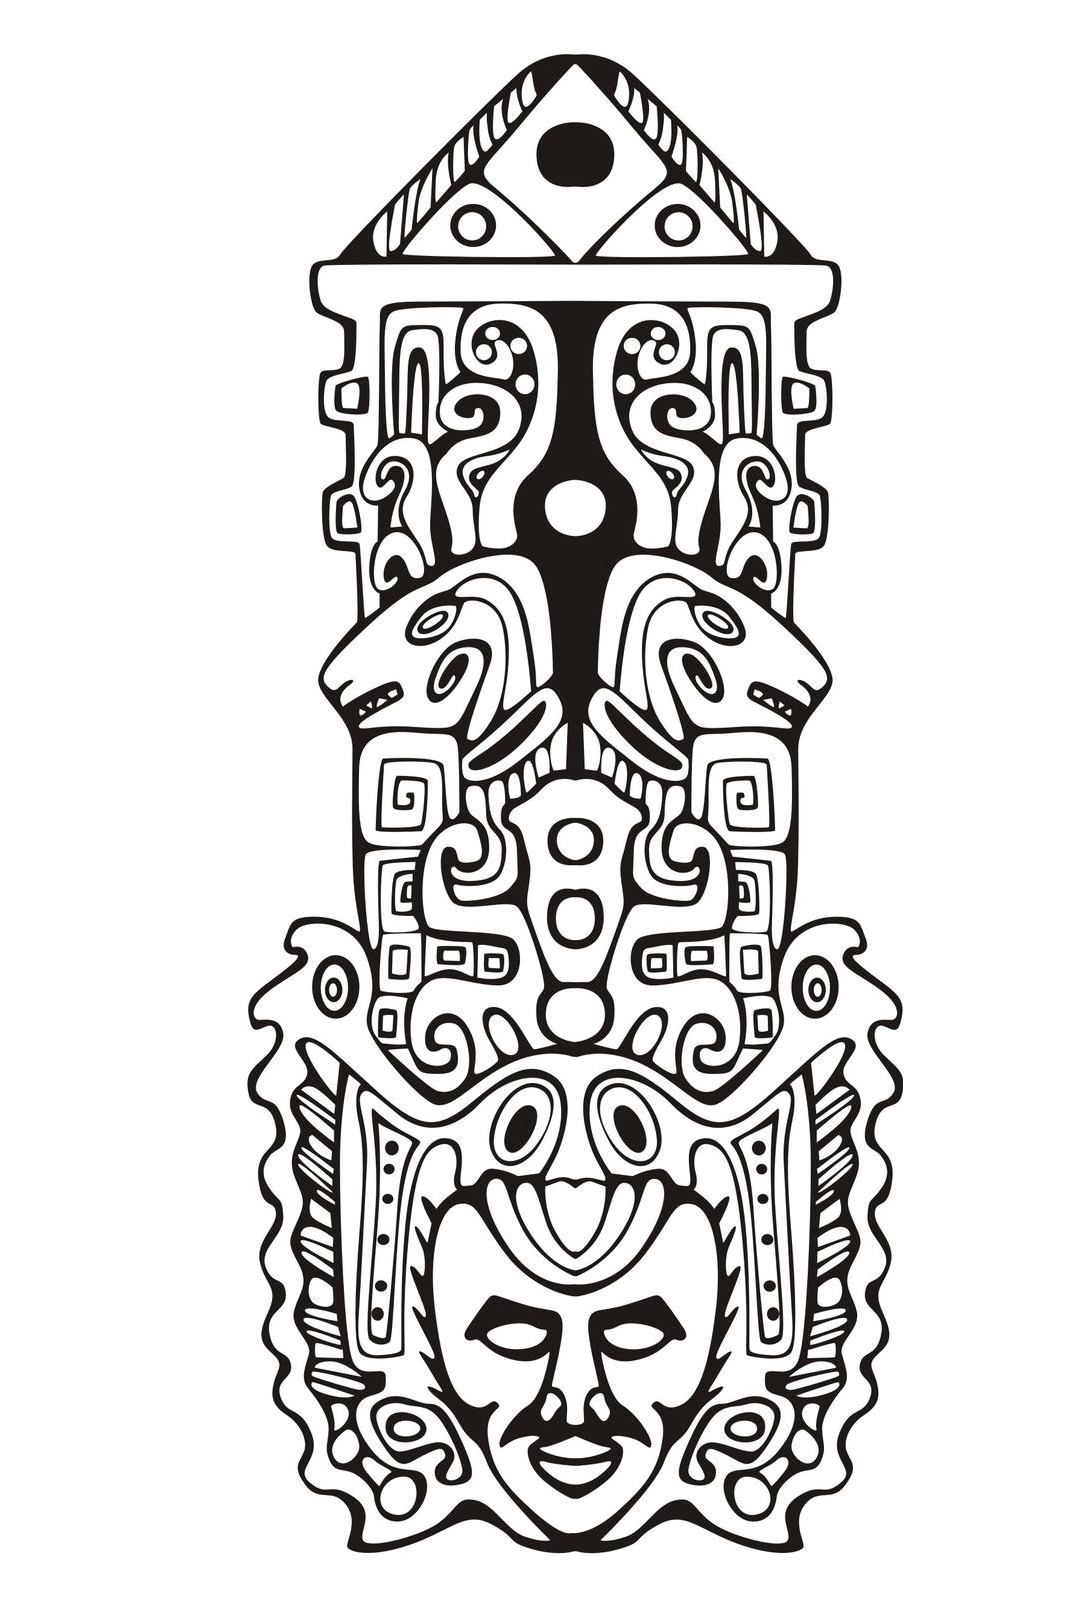 Colorear para adultos : Mayas, Aztecas e Incas - 12, Artista : Rocich   Origen : 123rf